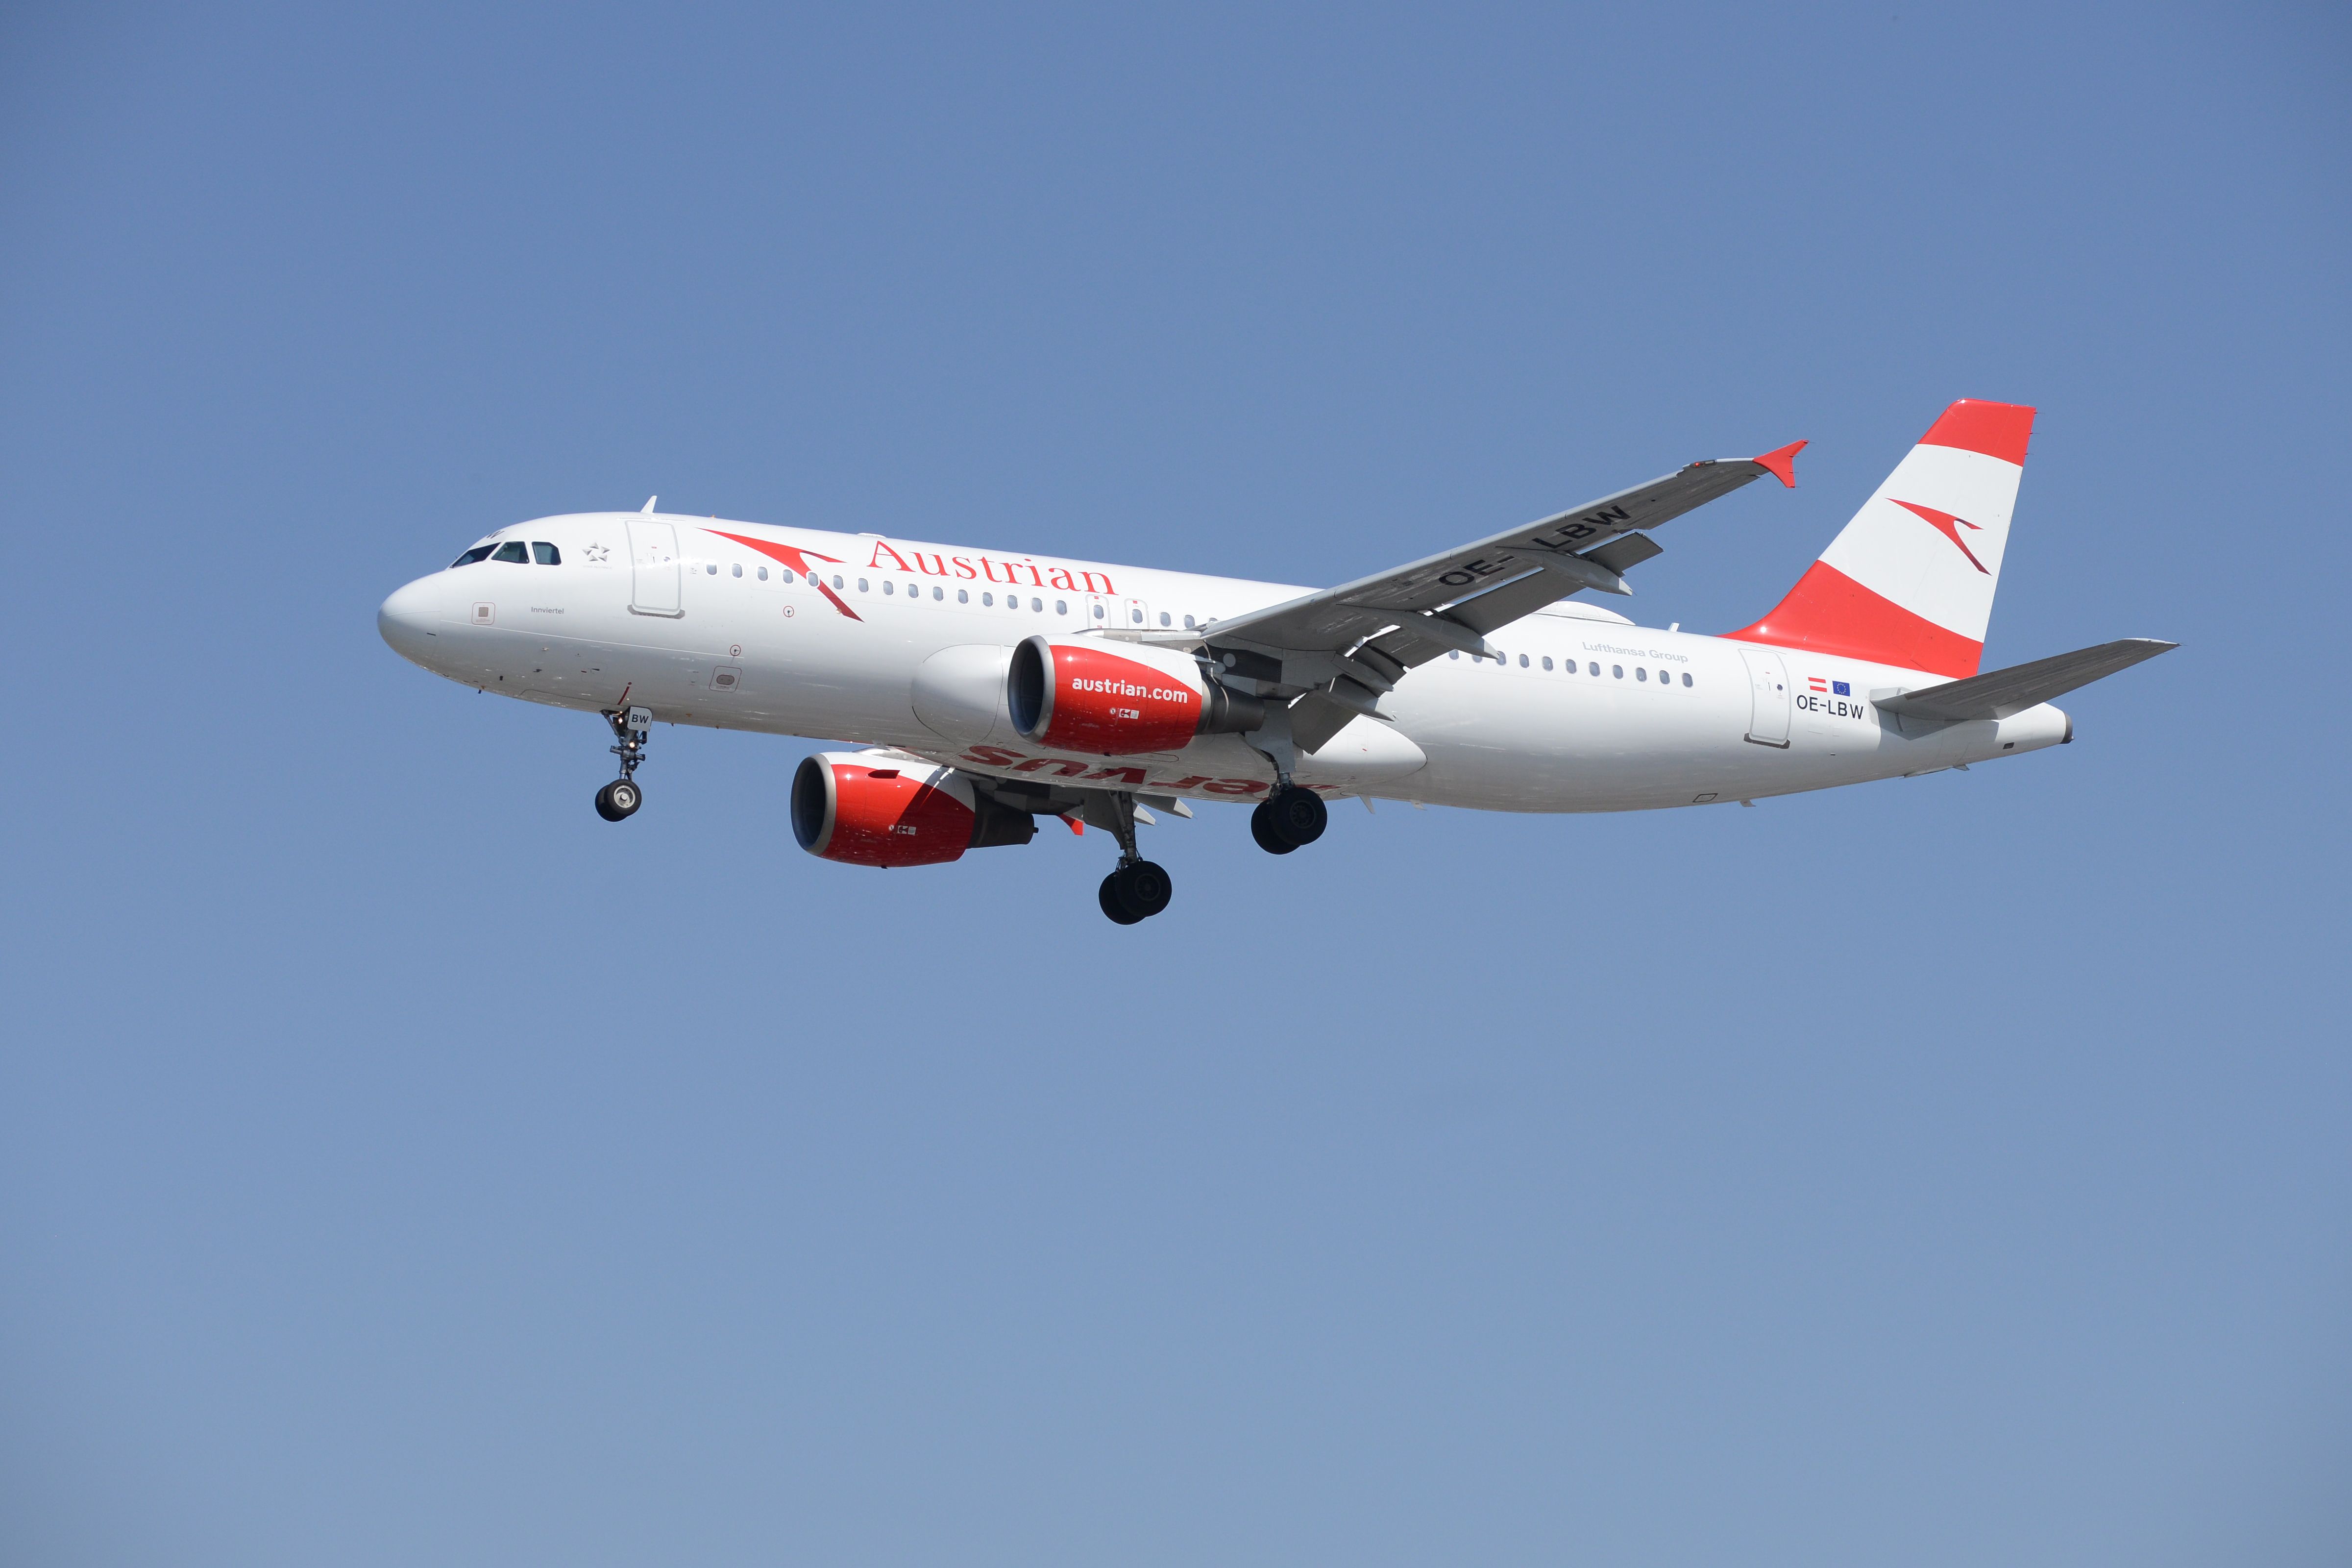 Austrian Airways Flights Canceled Amid Employee Pay Talks